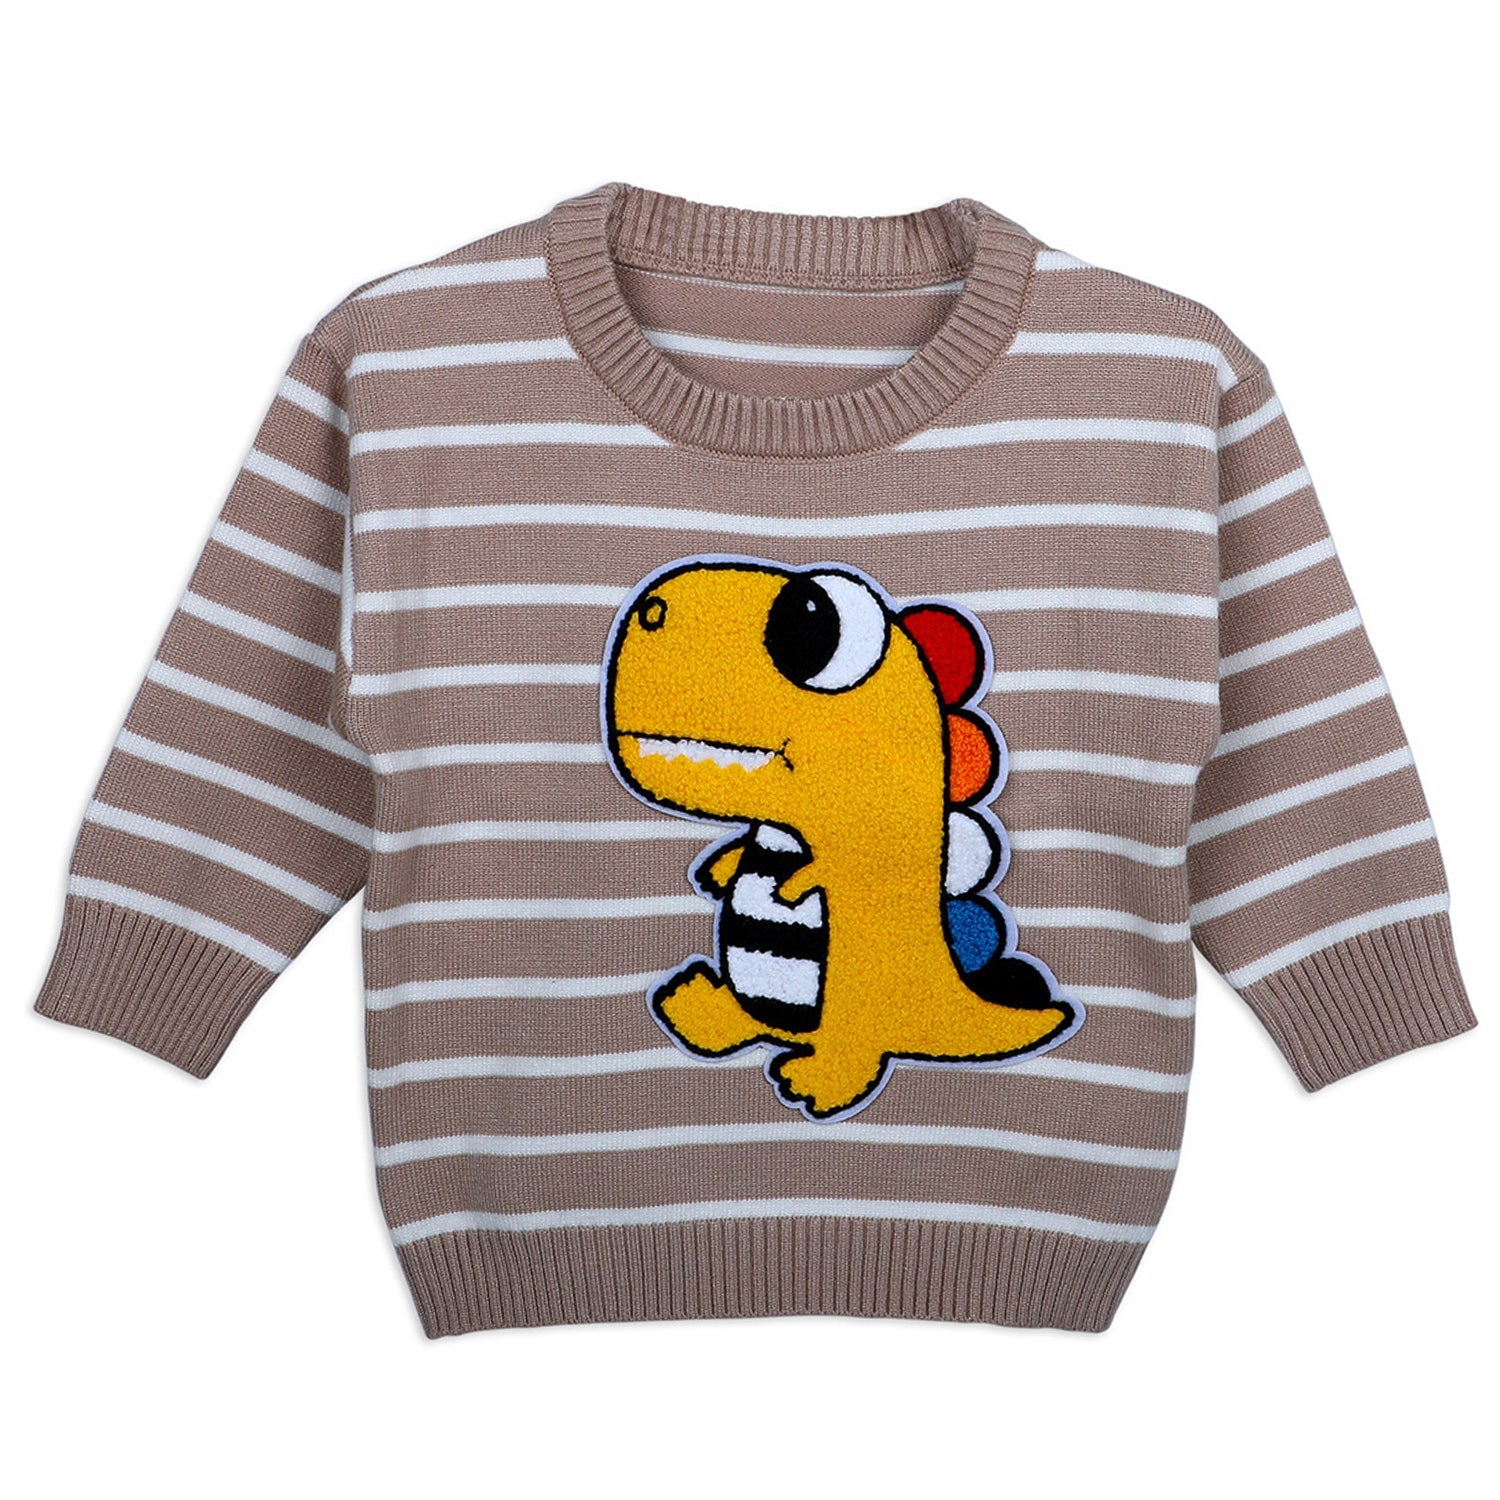 Dashing Dino Striped Premium Full Sleeves Knitted Sweater - Greyish Brown